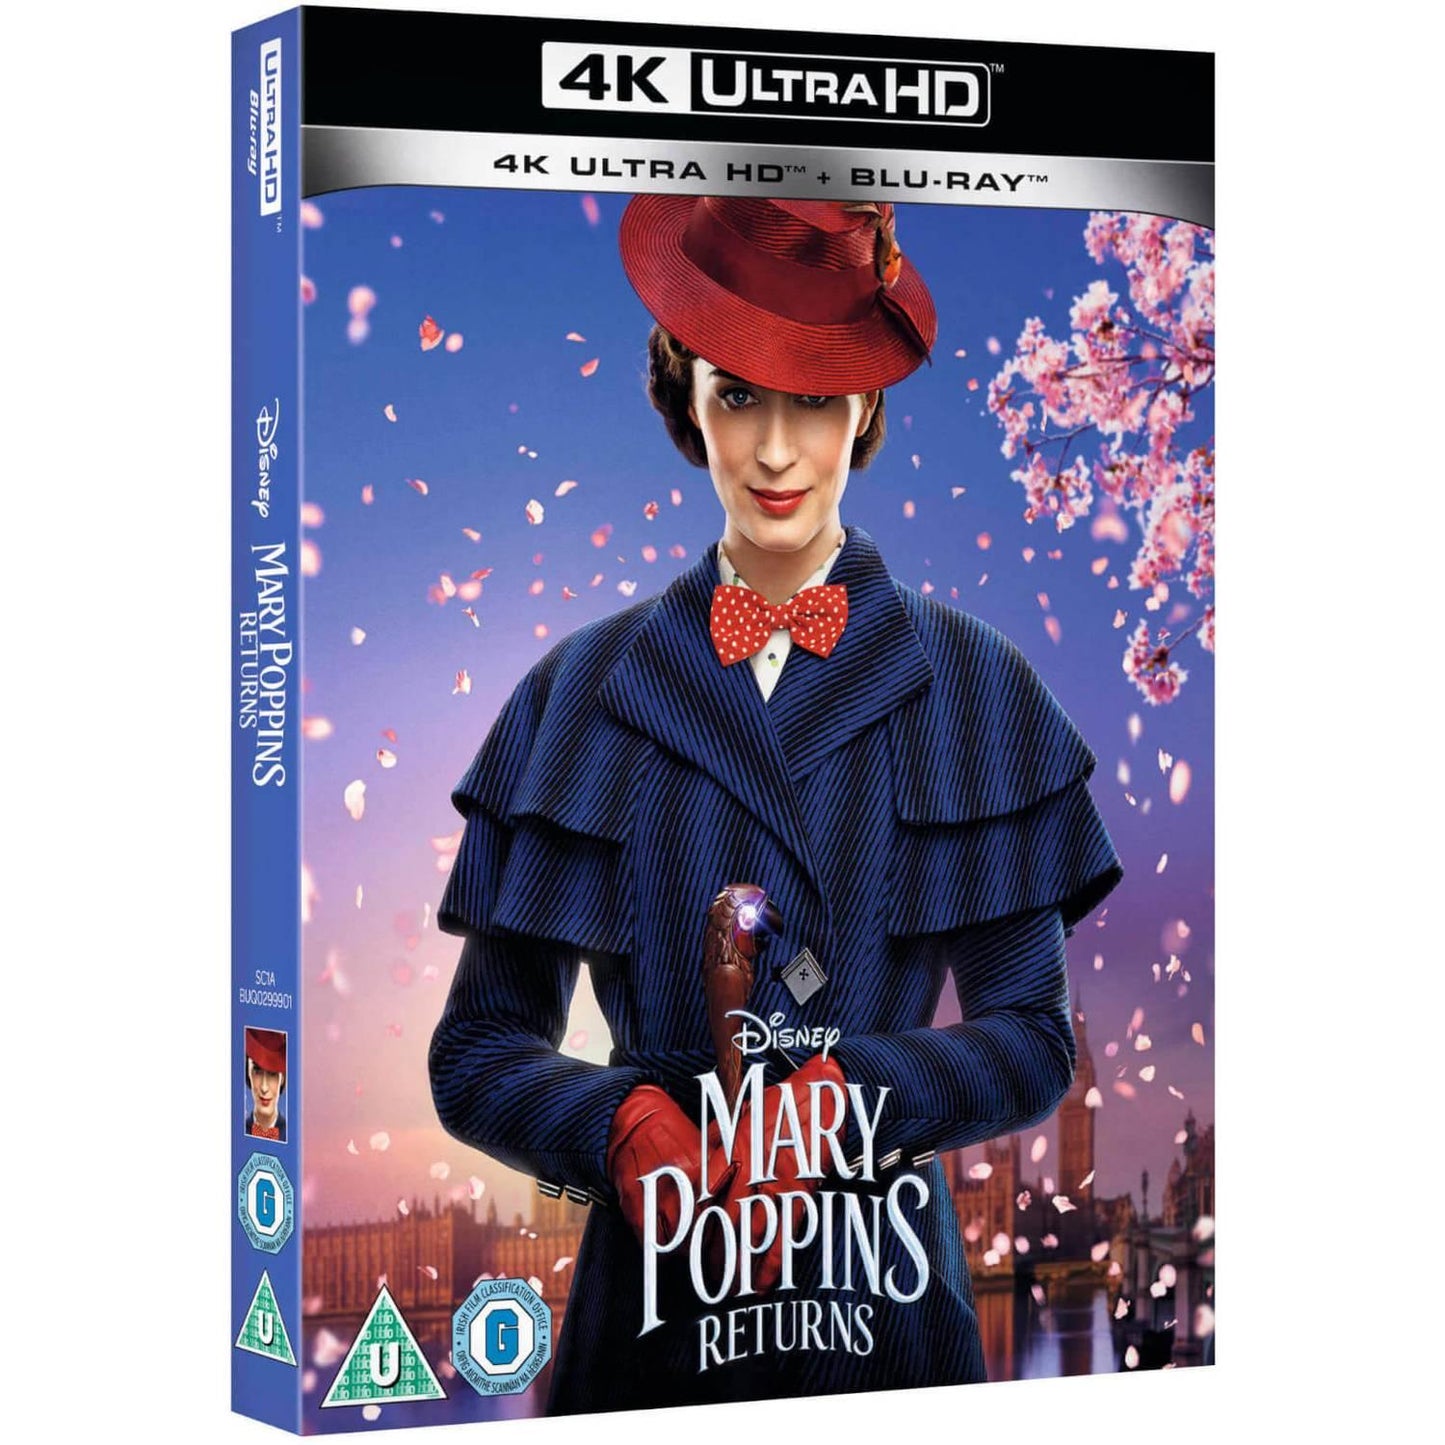 Мэри Поппинс возвращается (2018) (англ. язык) (4K UHD + Blu-ray)